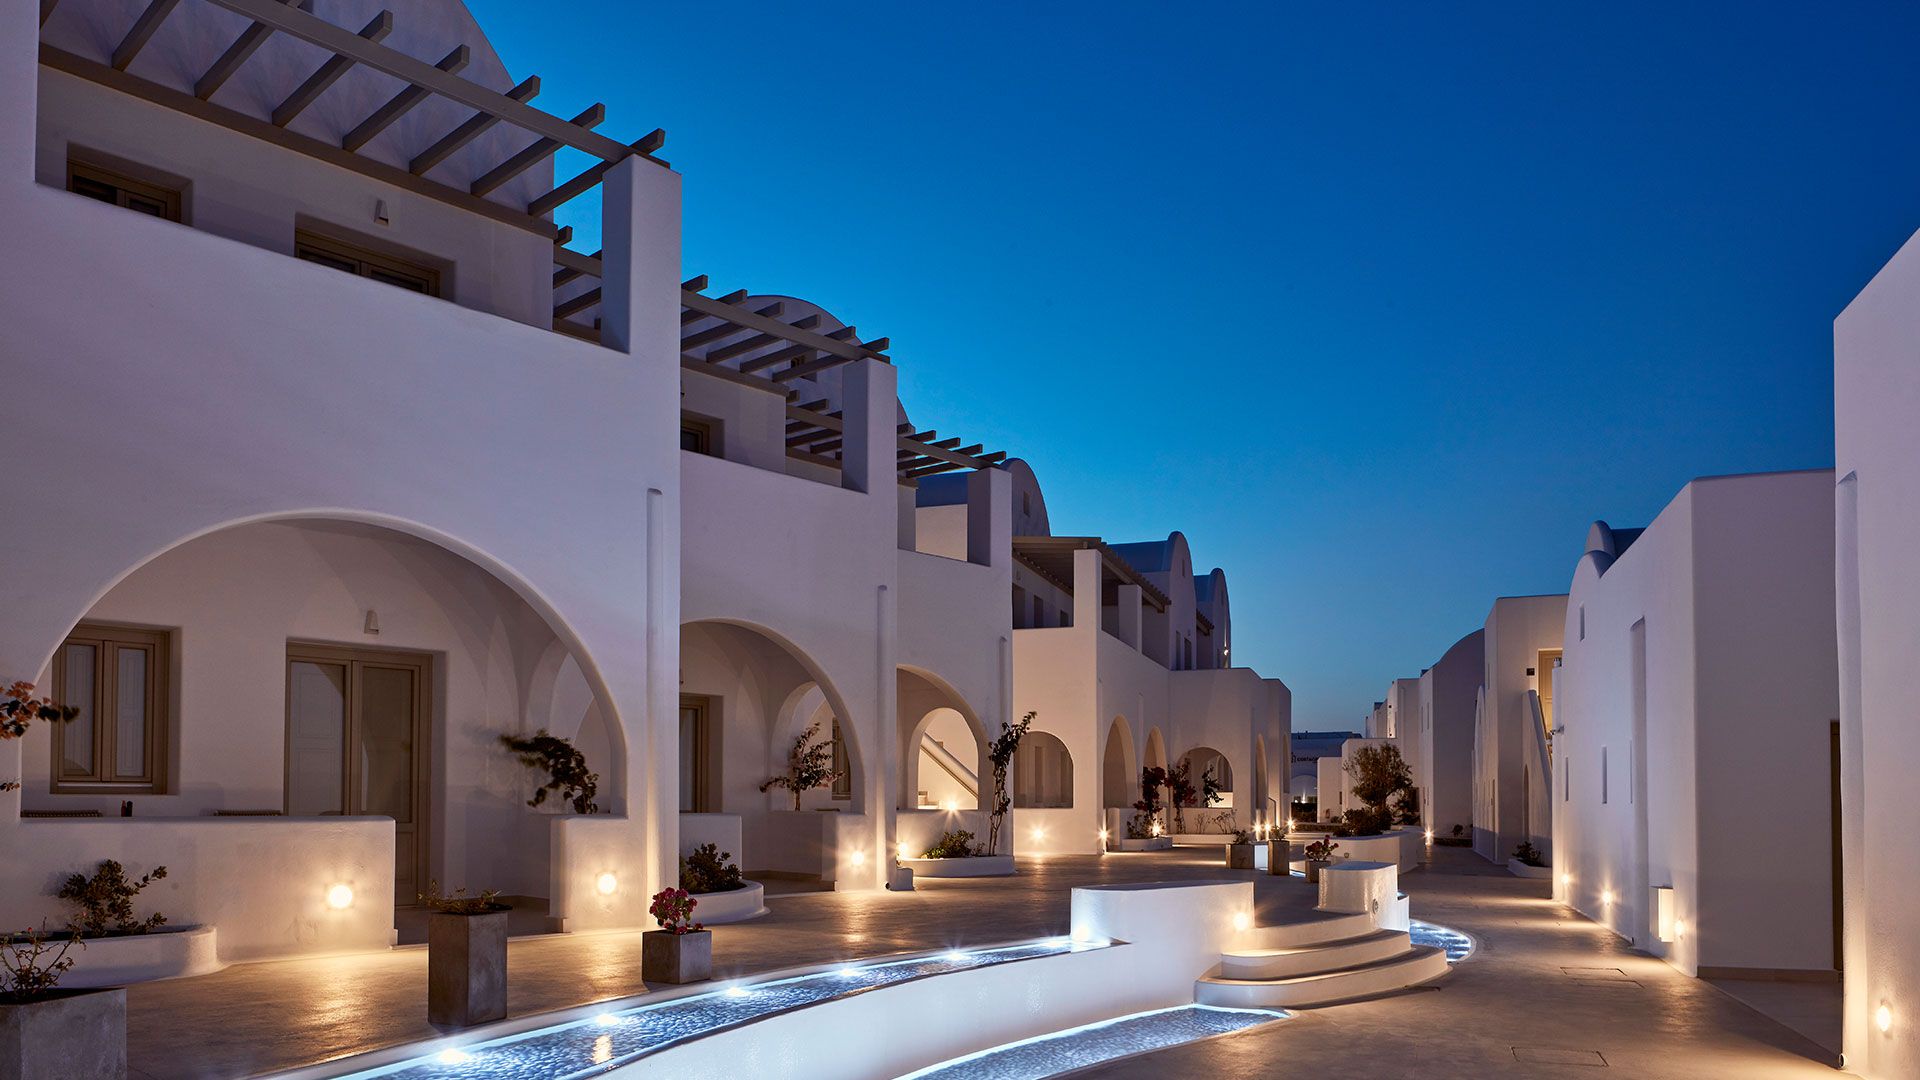 Costa Grand Resort & Spa, 5 αστέρων Ξενοδοχείο, Παραλία Καμαρίου, Σαντορίνη